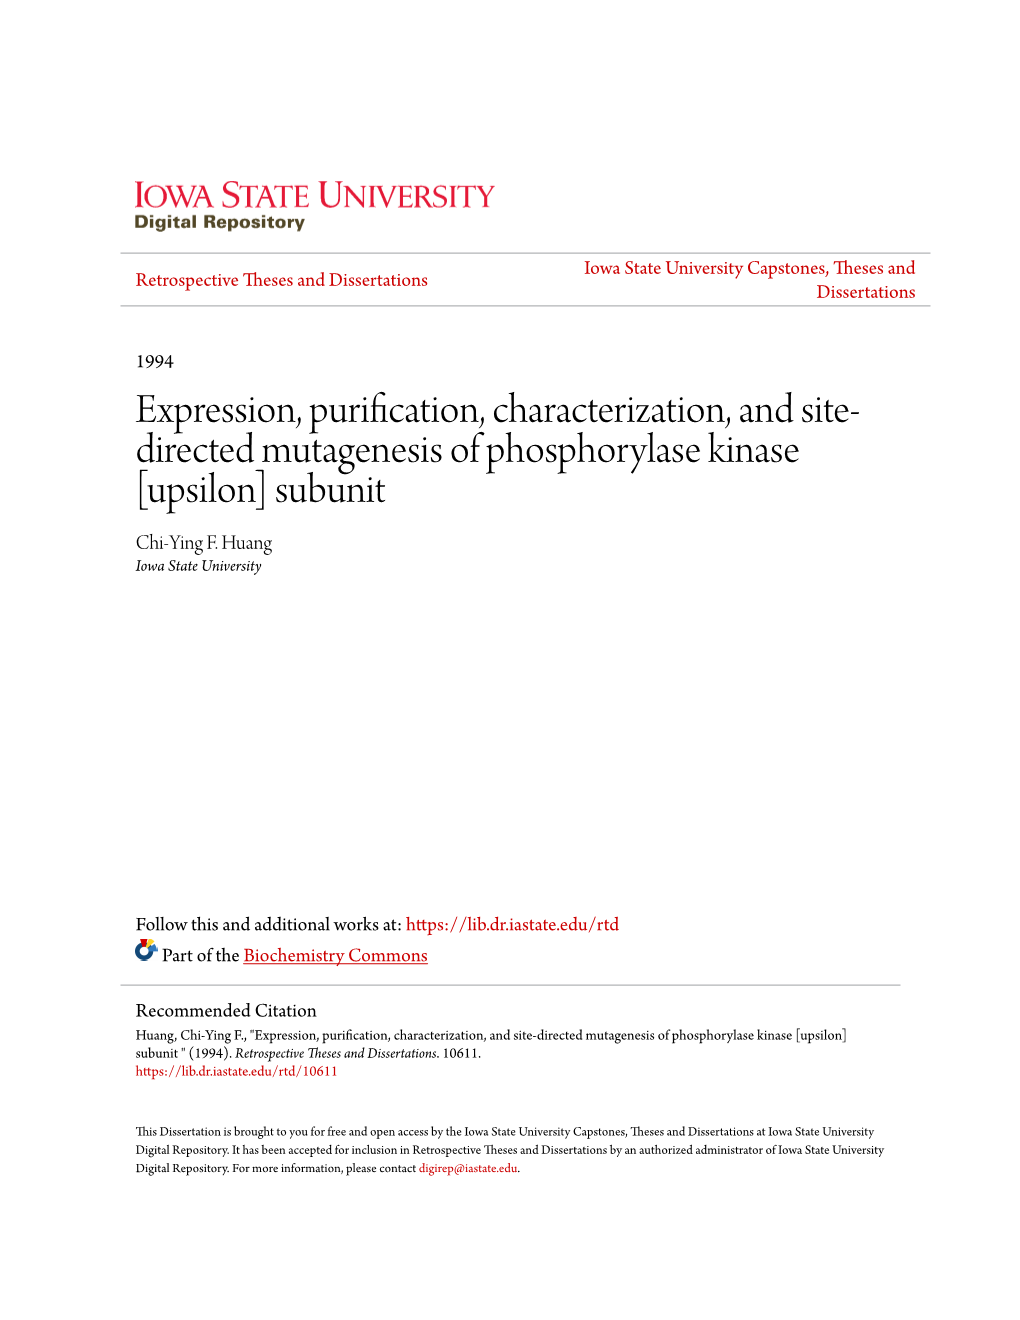 Expression, Purification, Characterization, and Site-Directed Mutagenesis of Phosphorylase Kinase [Upsilon] Subunit " (1994)